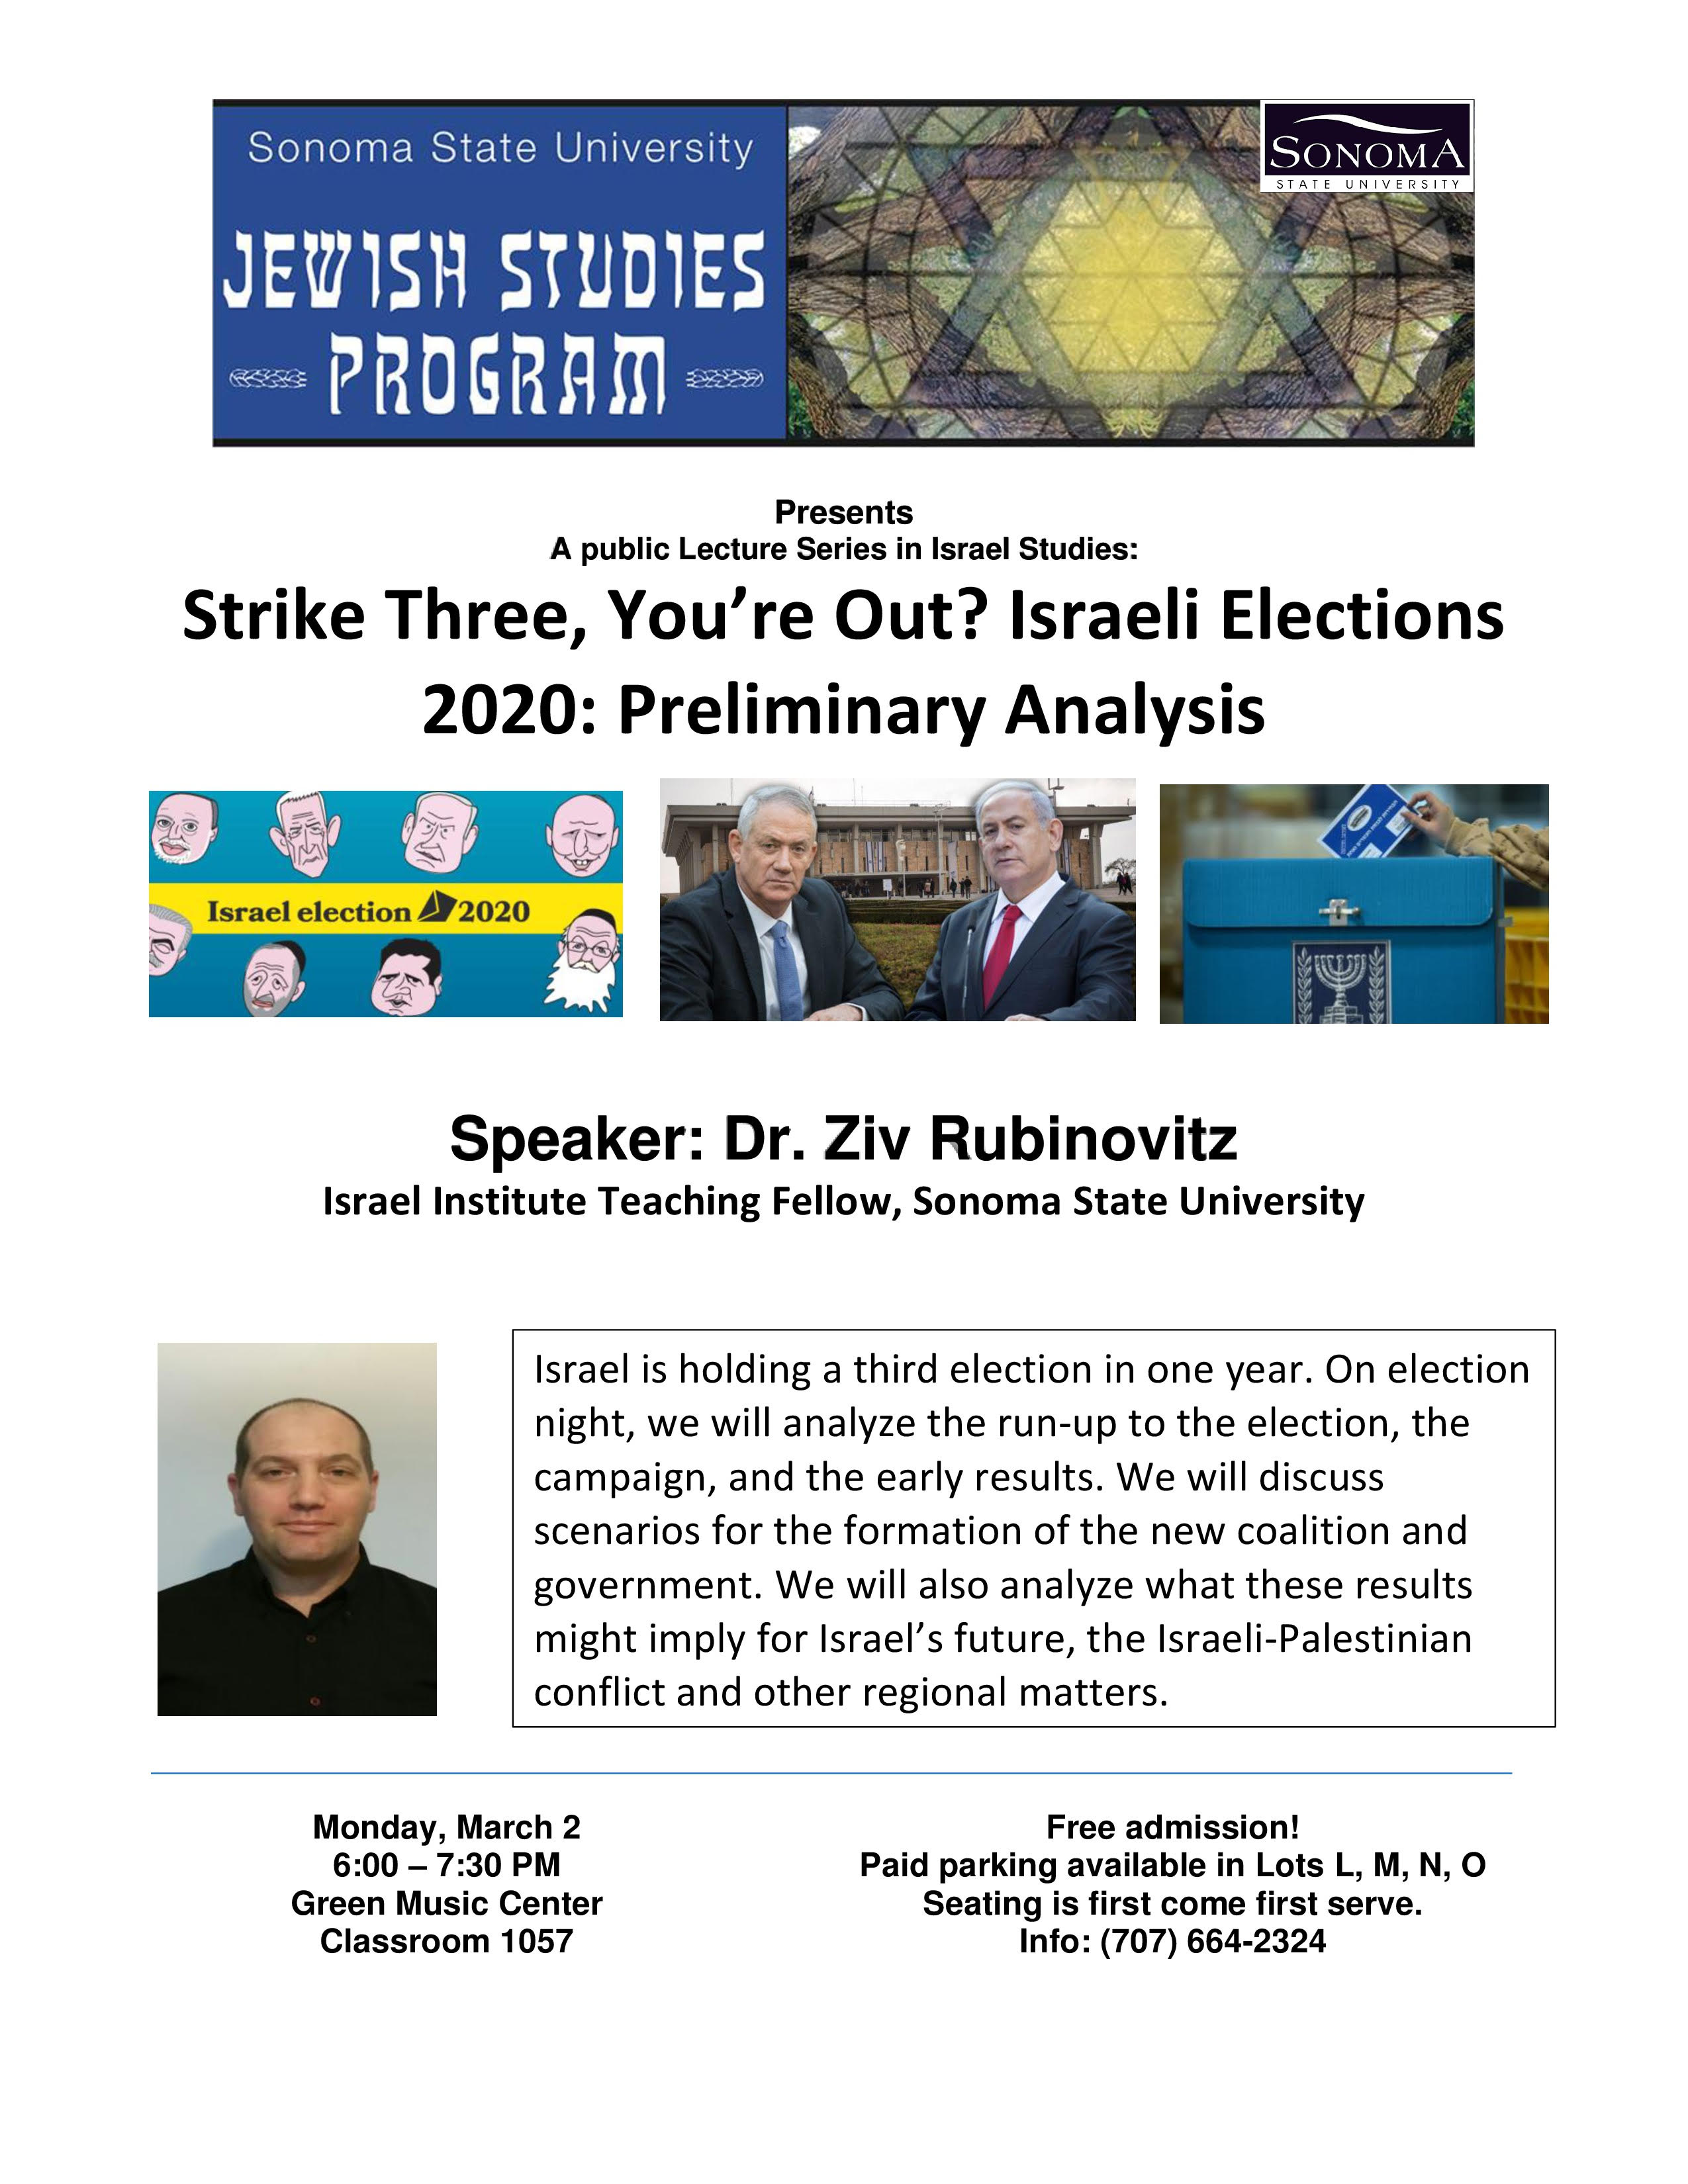 Jewish Studies Program event poster